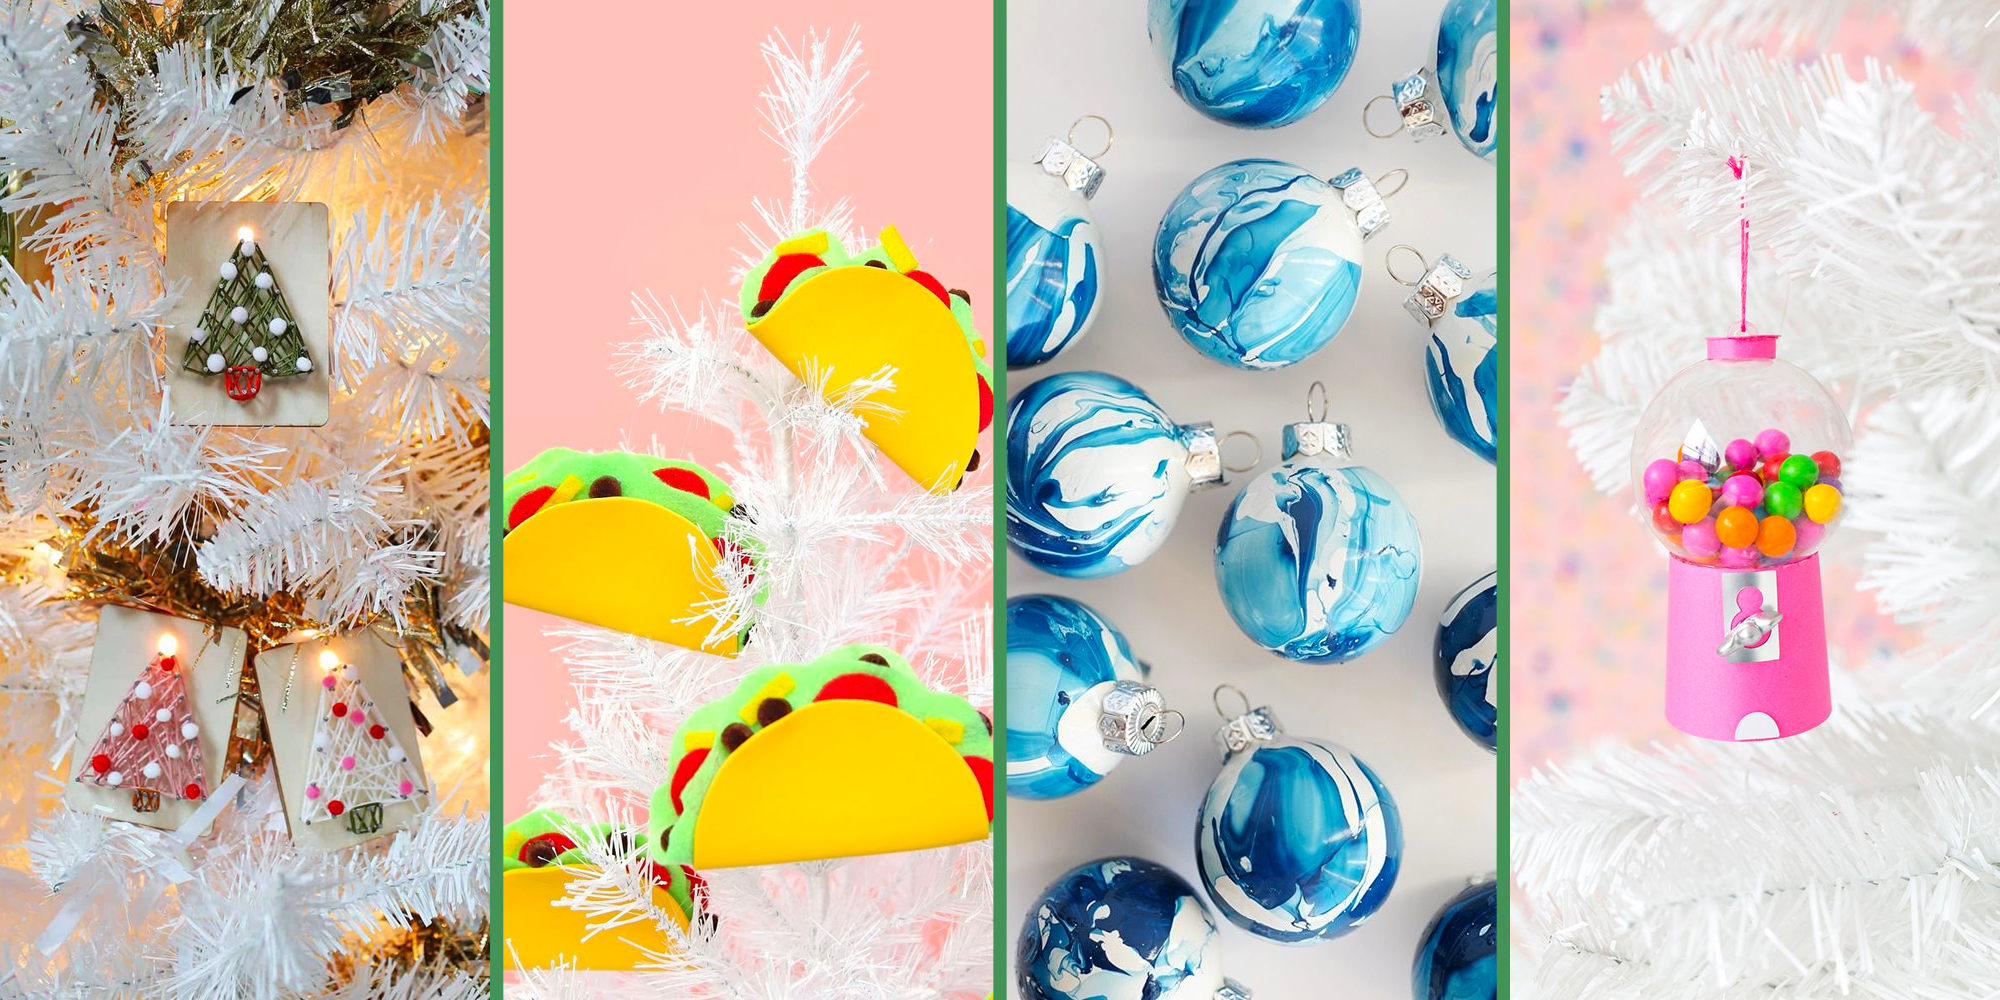 75 Best DIY Christmas Ornaments - Homemade Ornament Tutorials